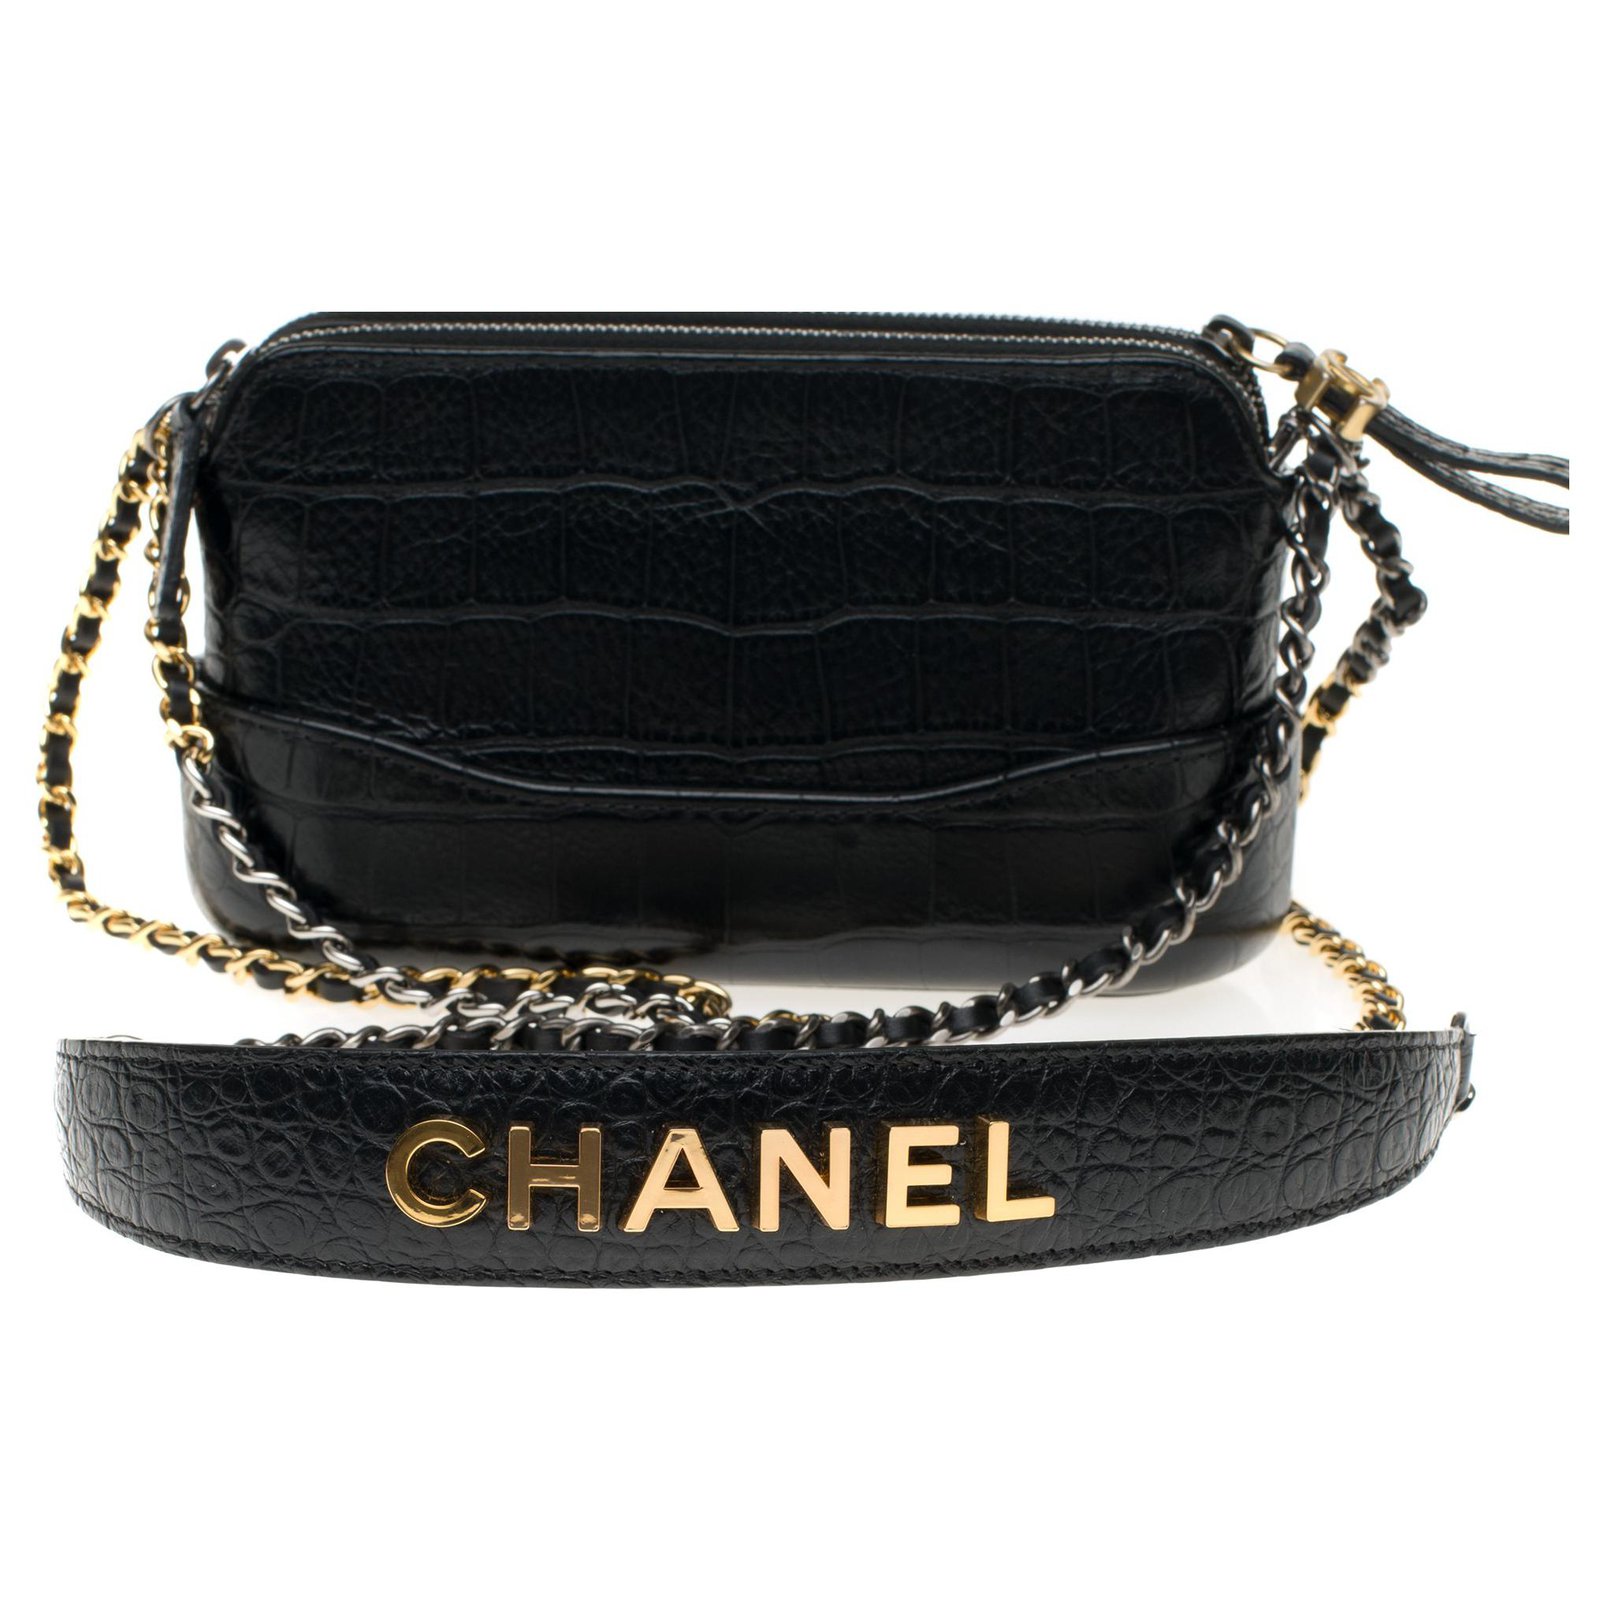 Chanel Mini Gabrielle shoulder bag in crocodile-embossed black